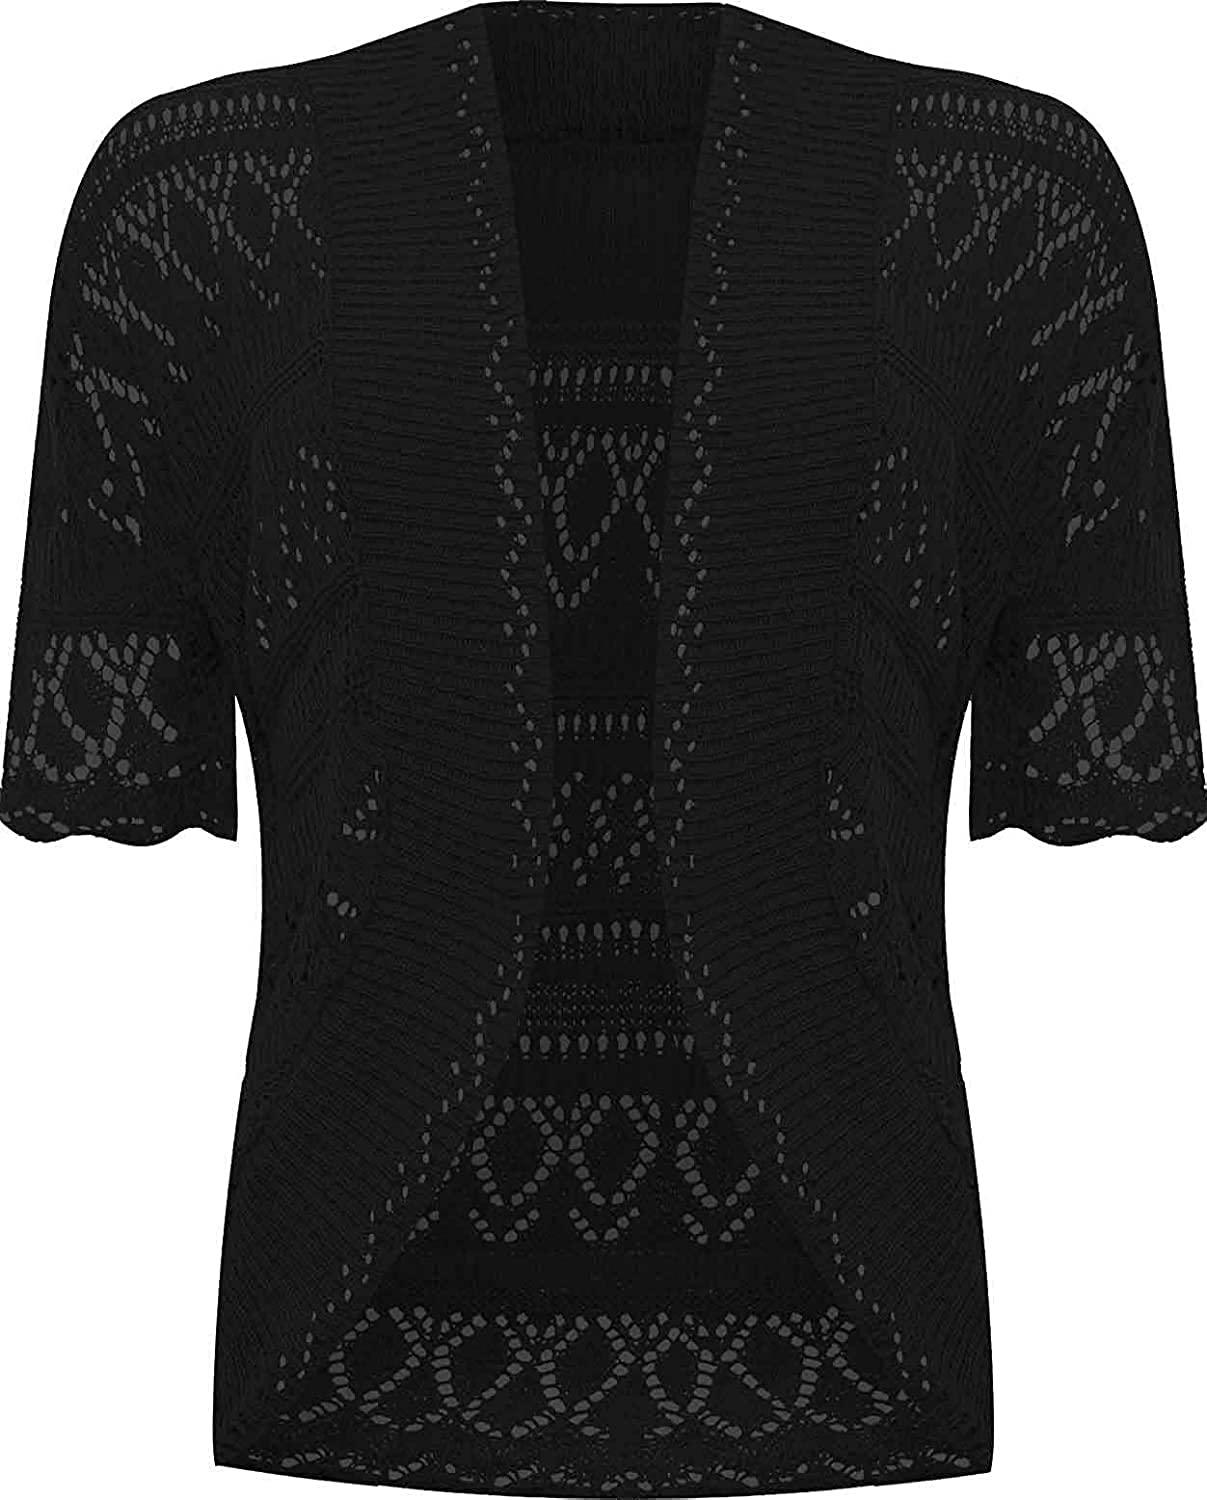 New Ladies Women Girls Crochet Knitted Short Sleeve Shrug Cardigan Bolero Top 